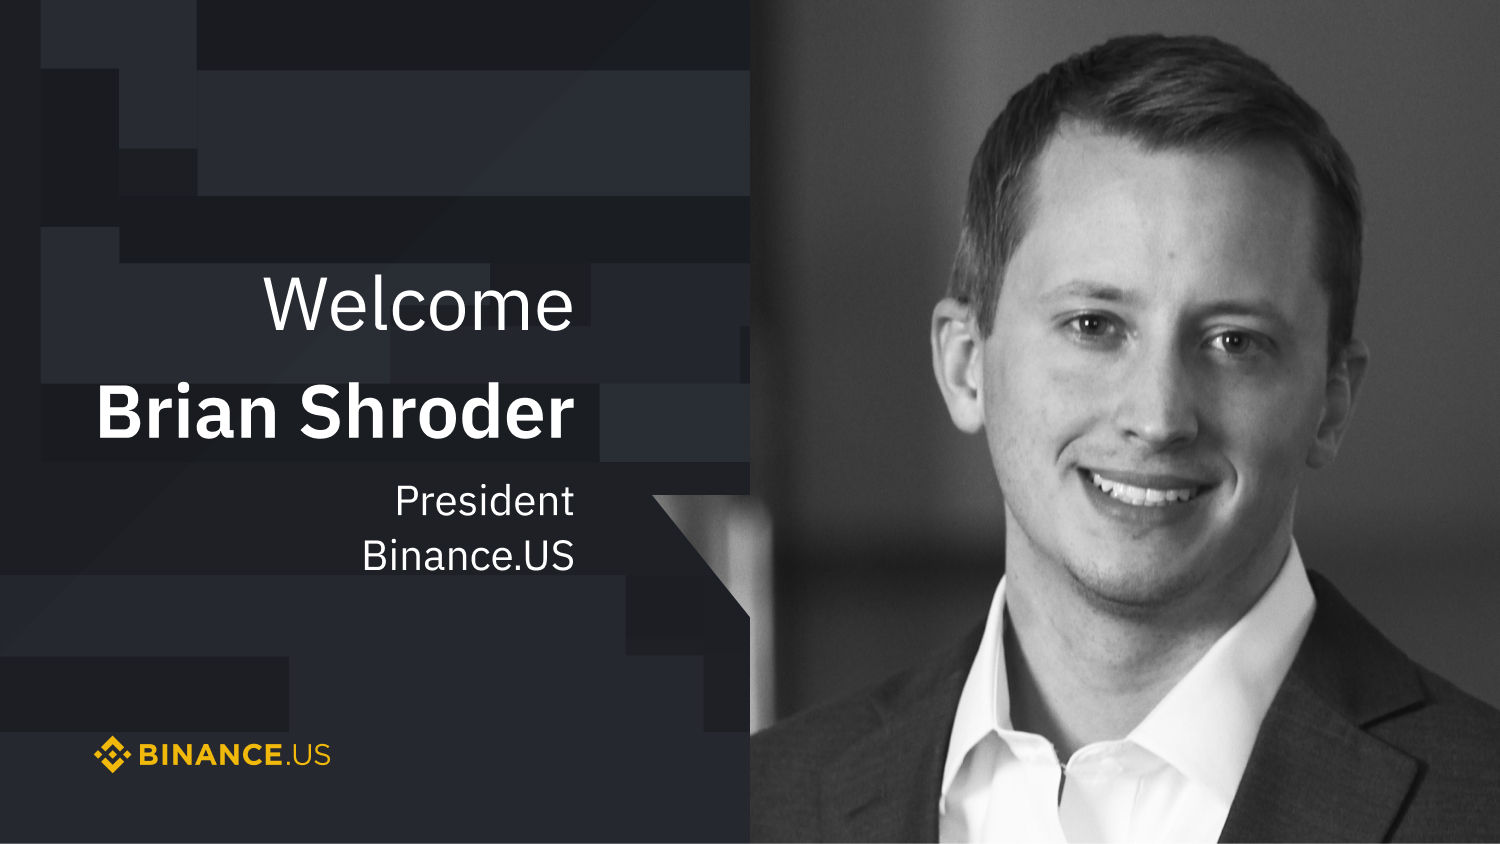 Welcome Brian Shroder, President of Binance.US